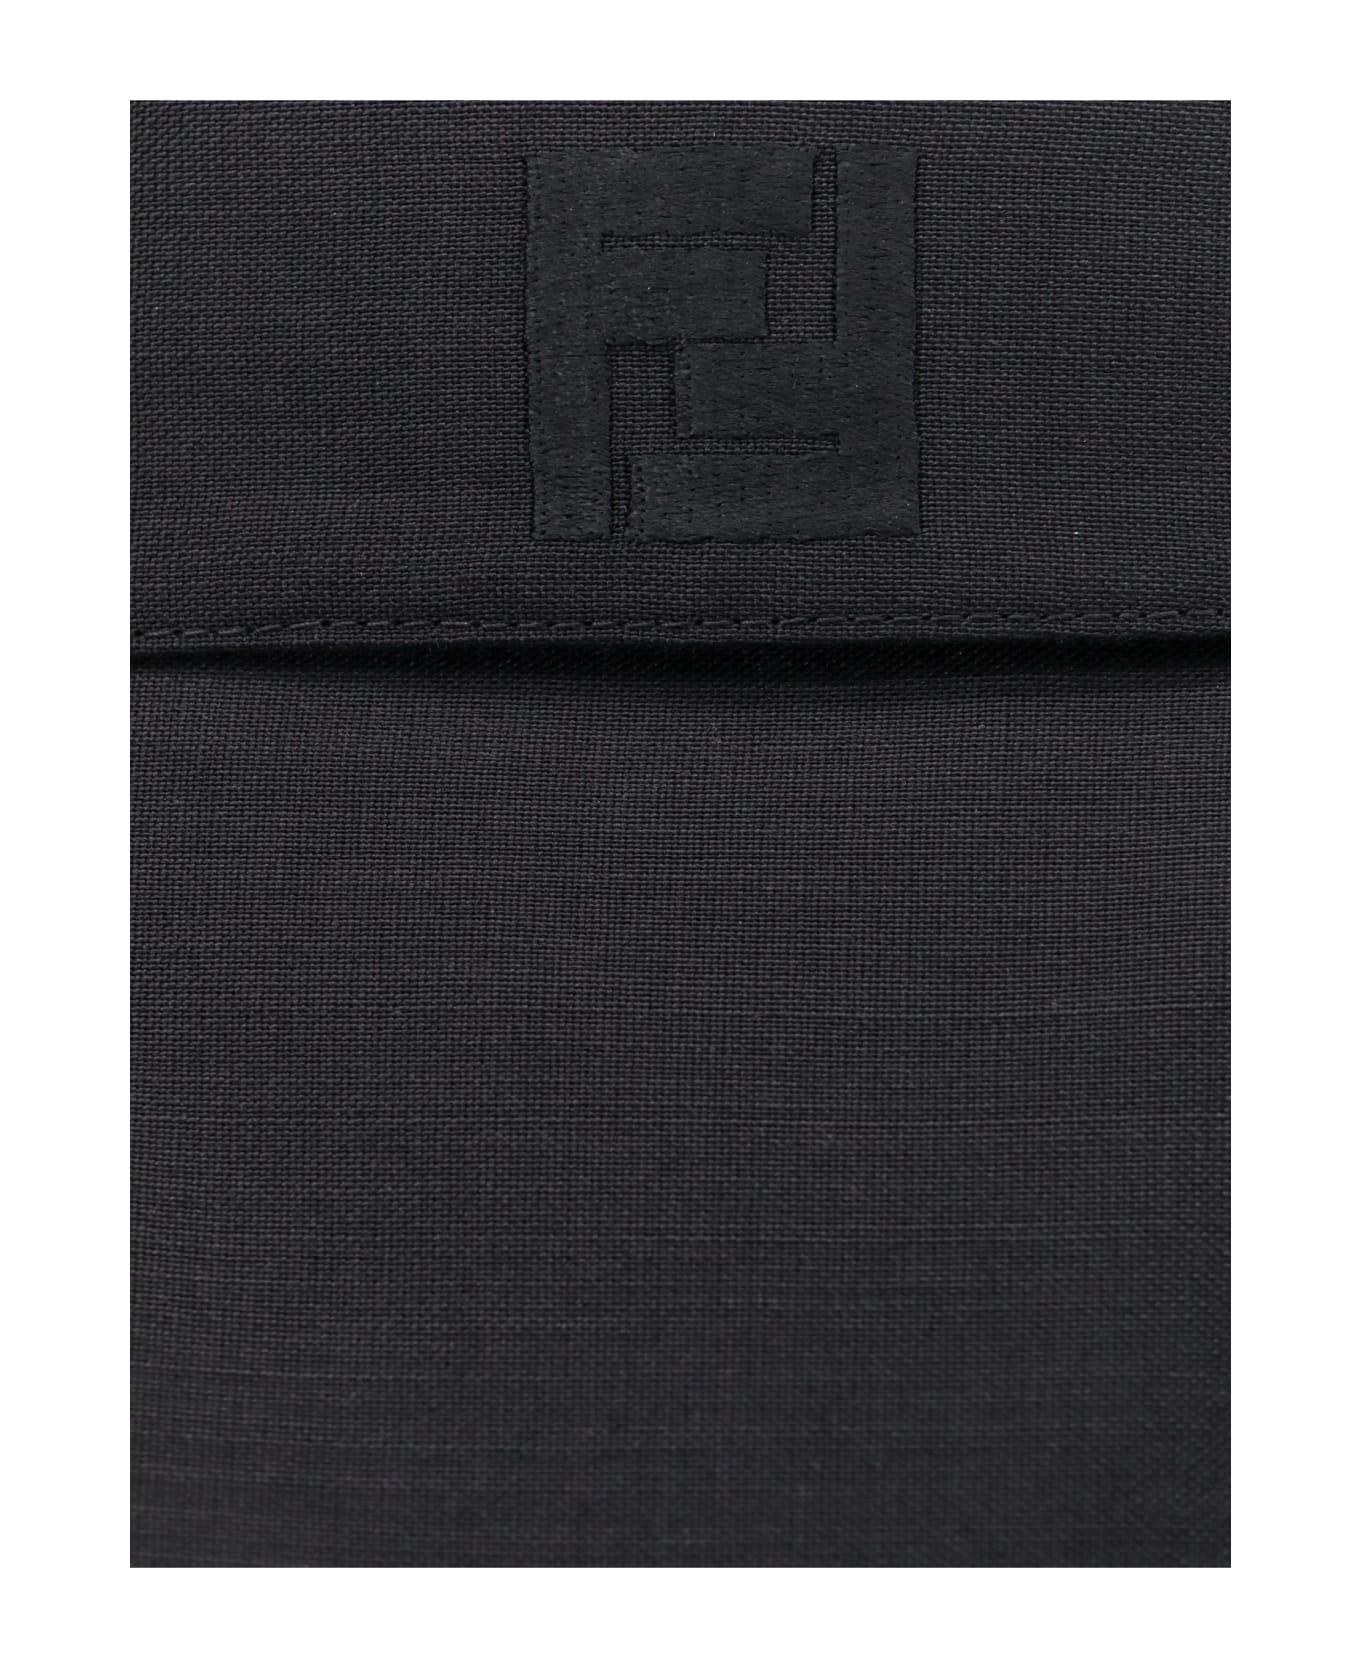 Fendi Shirt - Black ジャケット